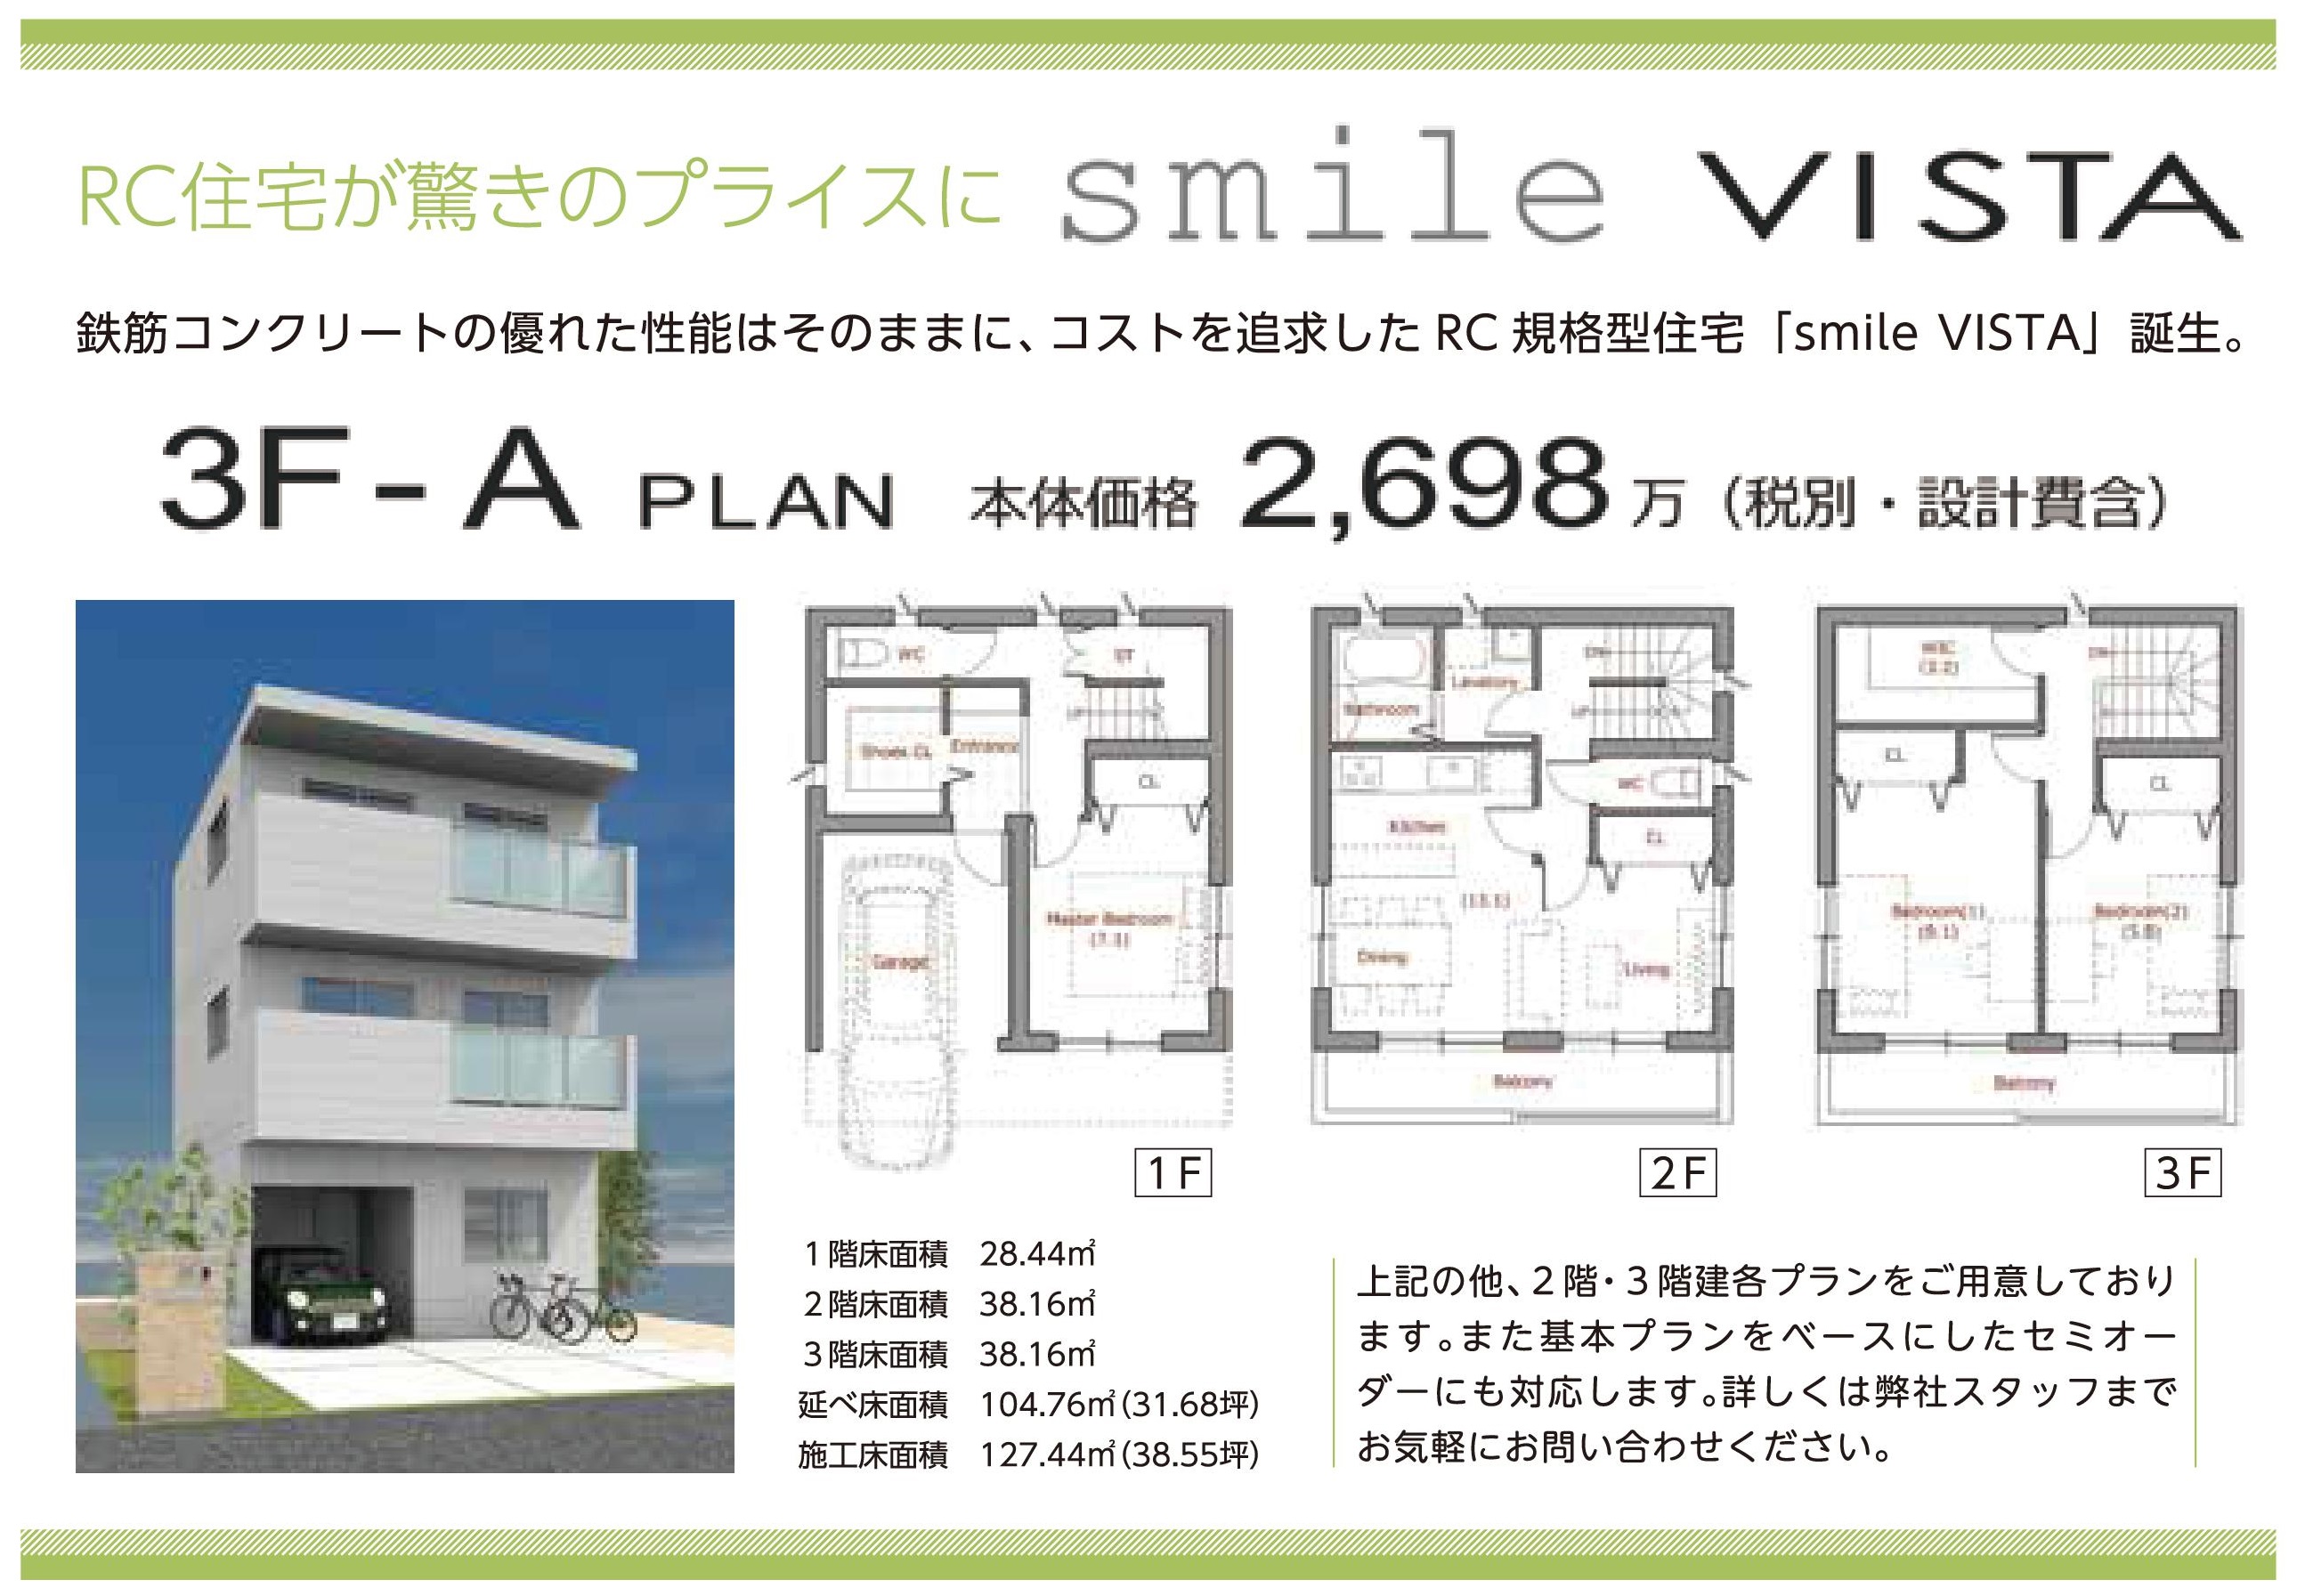 RC規格型住宅「smile VISTA」